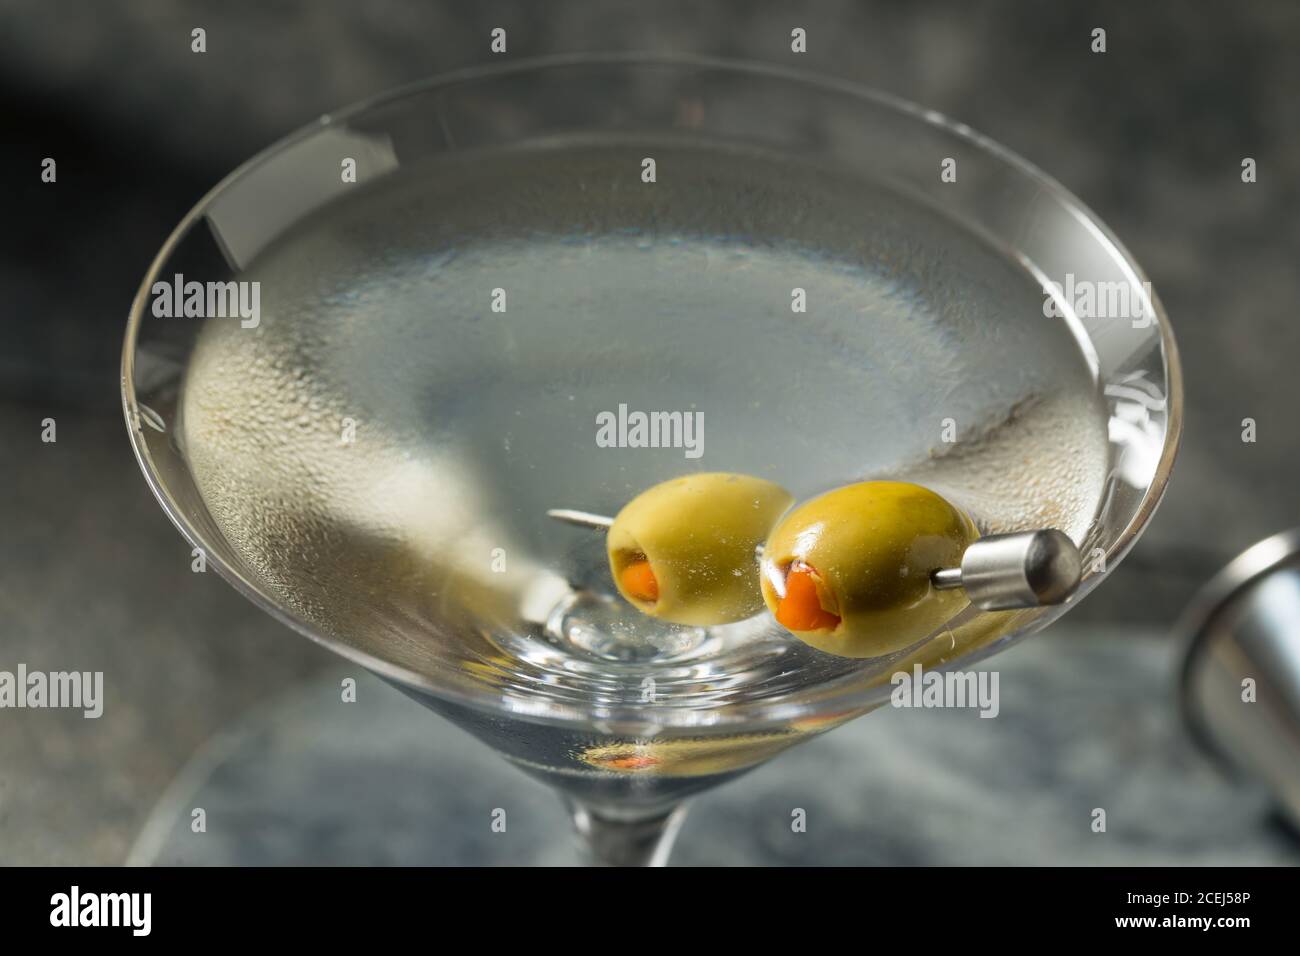 Boozy Dry Vodka Martini avec Green olives Banque D'Images